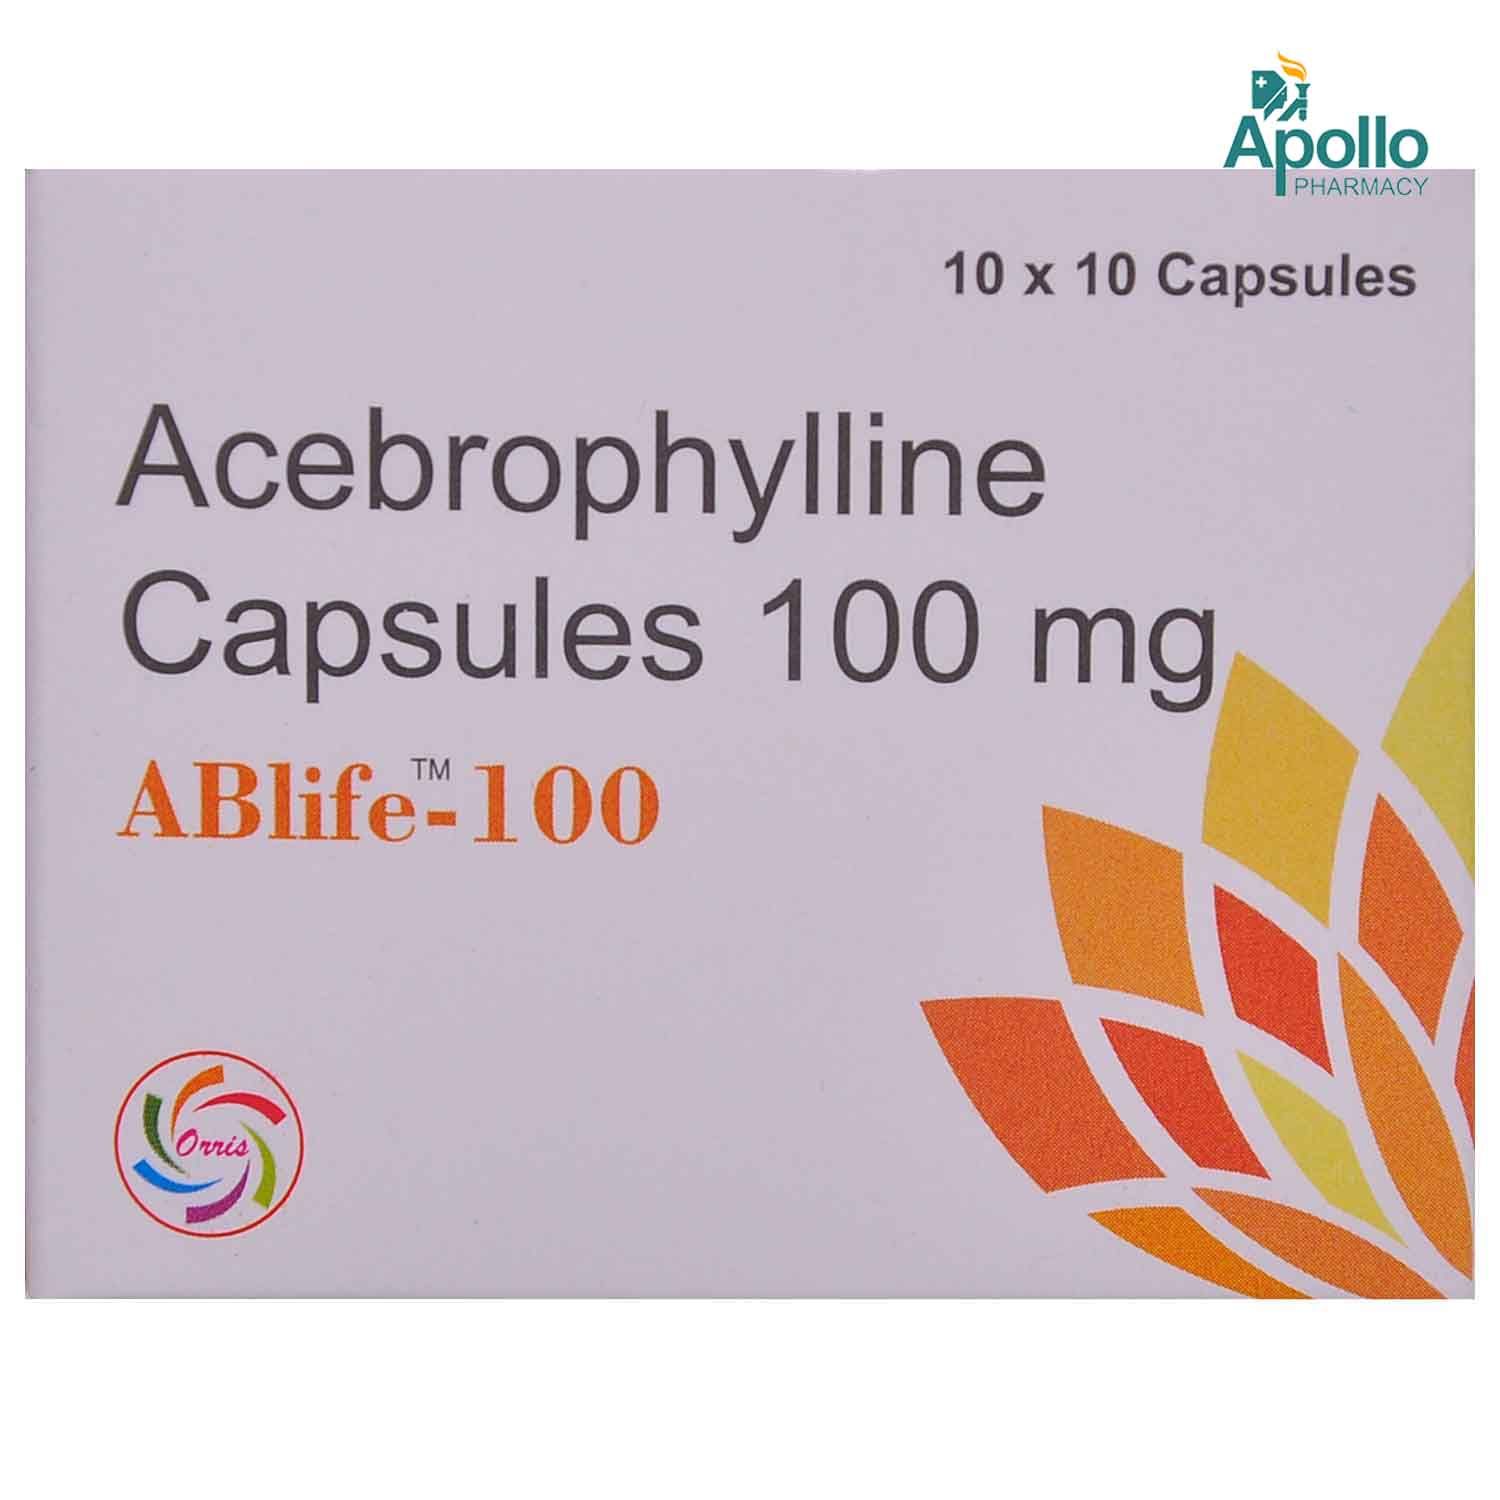 ABlife-100 Capsule 10's, Pack of 10 CAPSULES